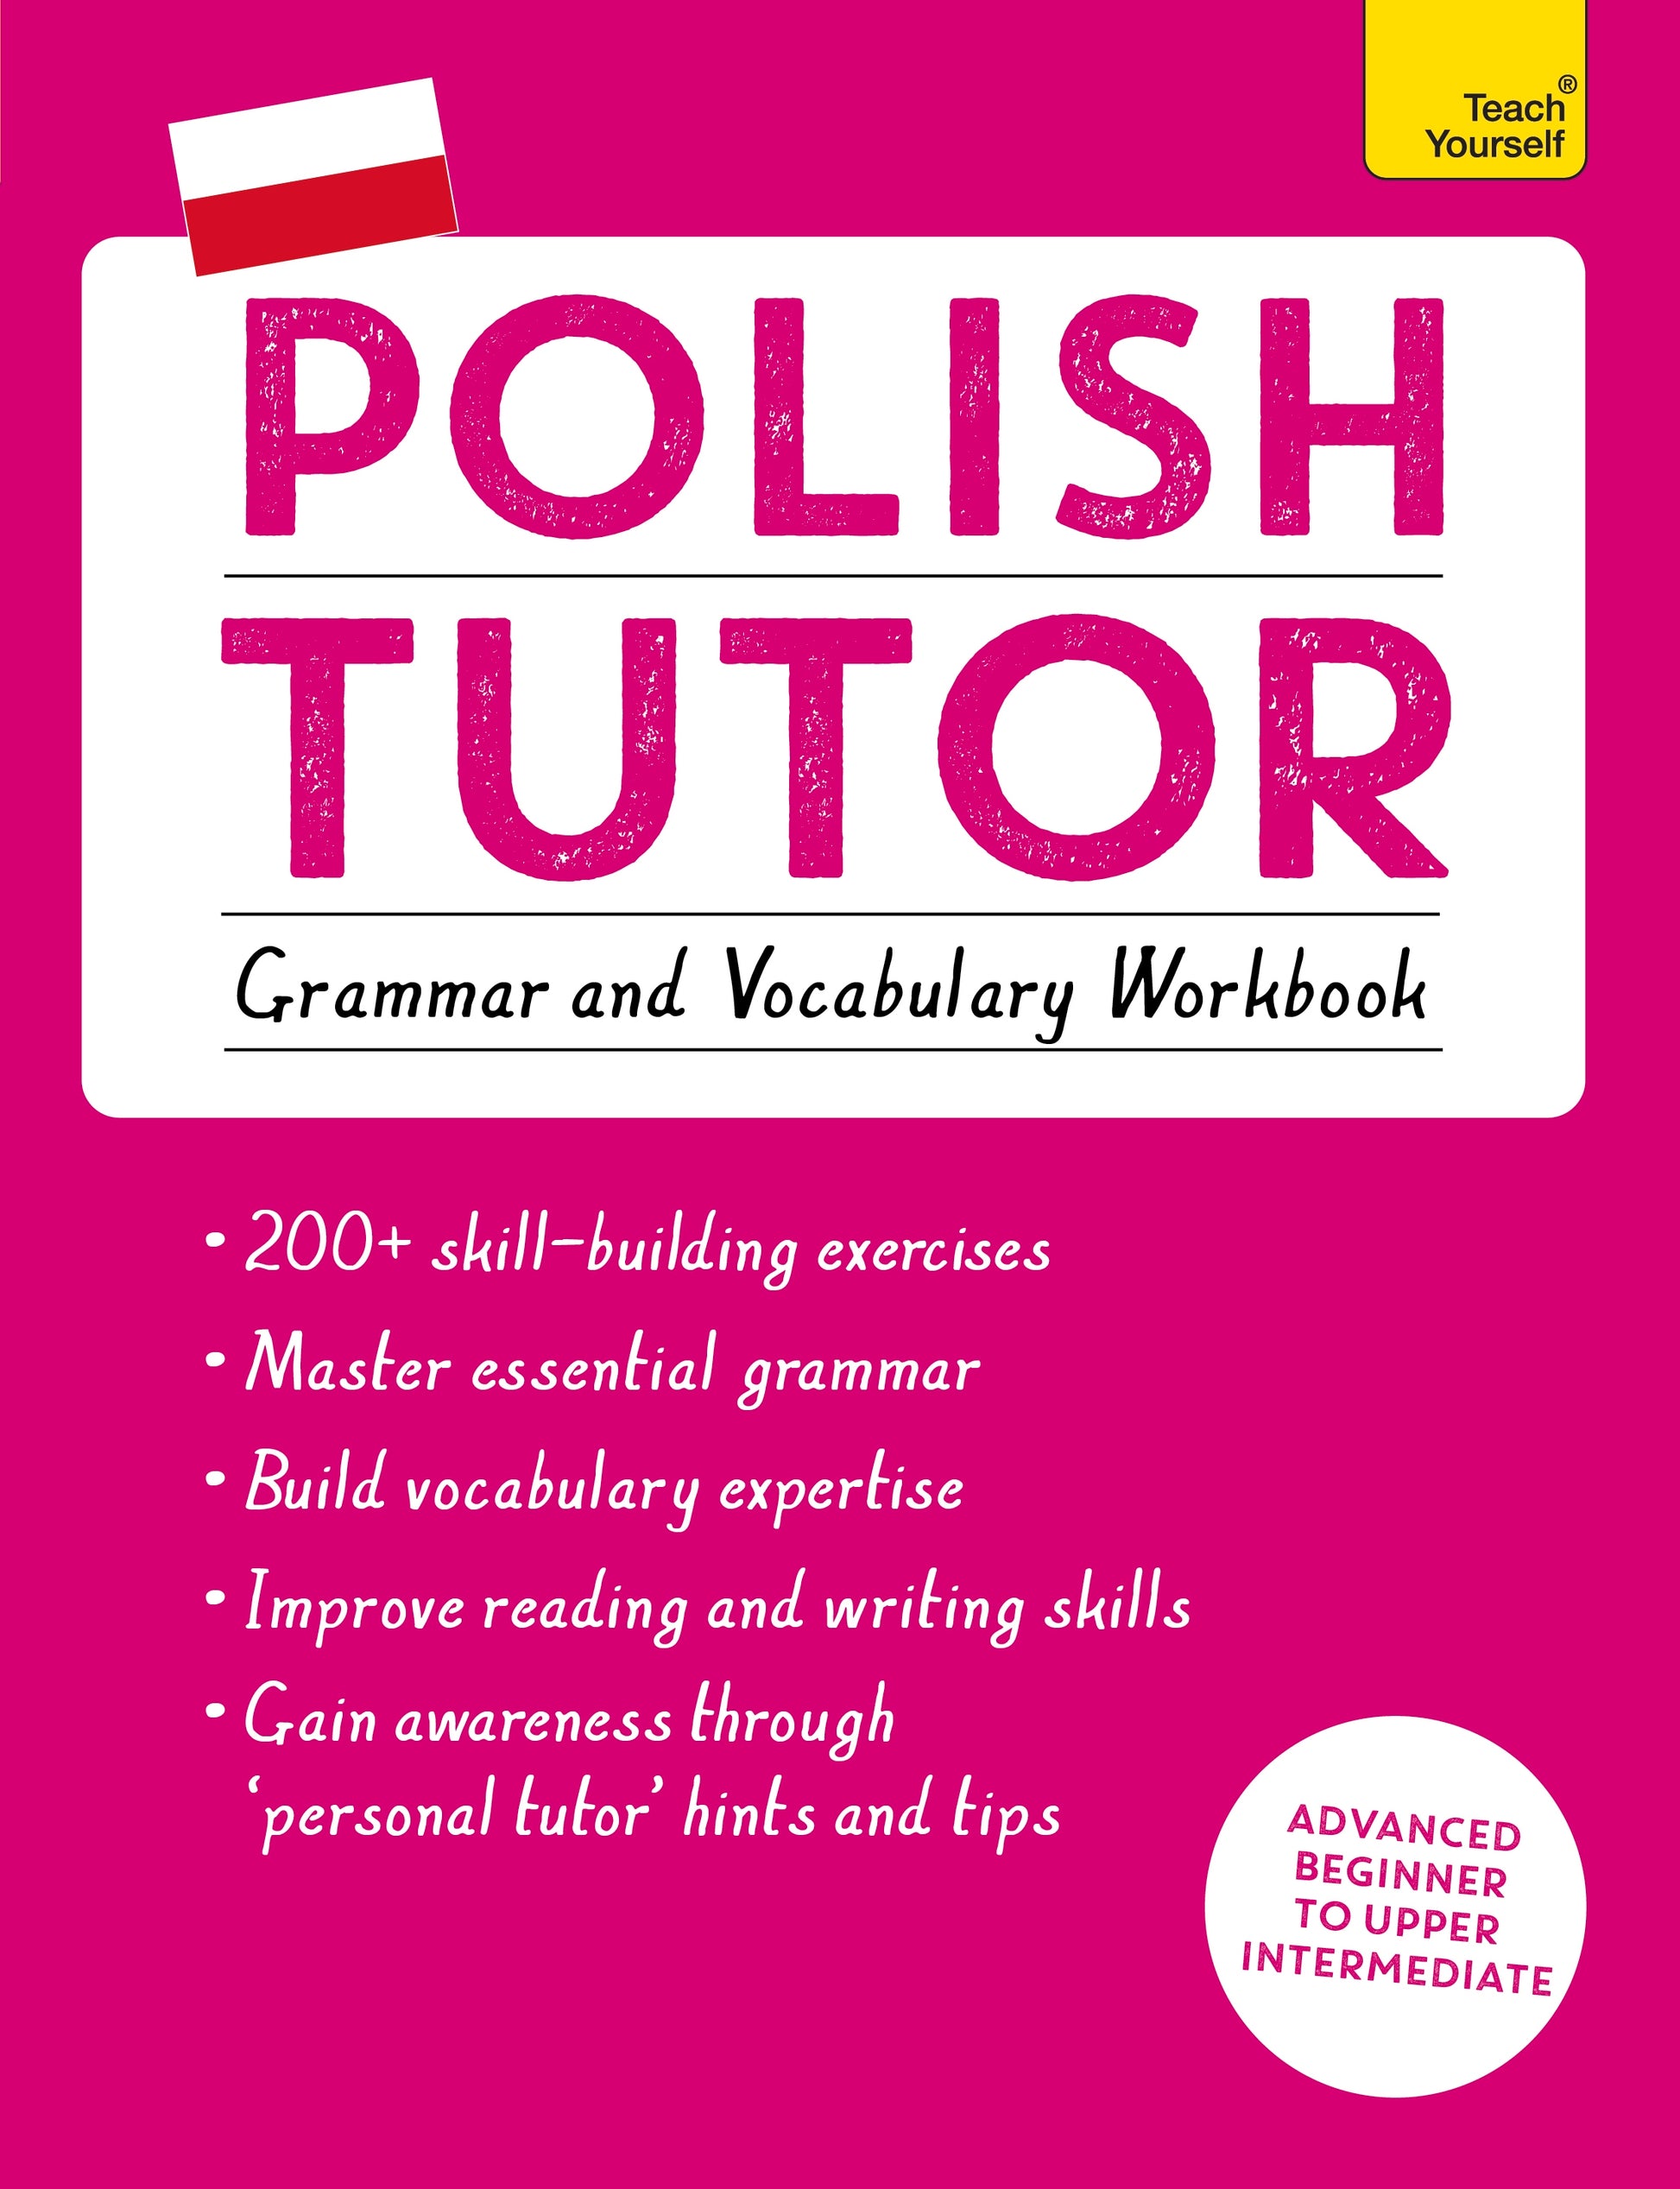 Polish Tutor: Grammar and Vocabulary Workbook (Learn Polish with Teach Yourself) by Joanna Michalak-Gray